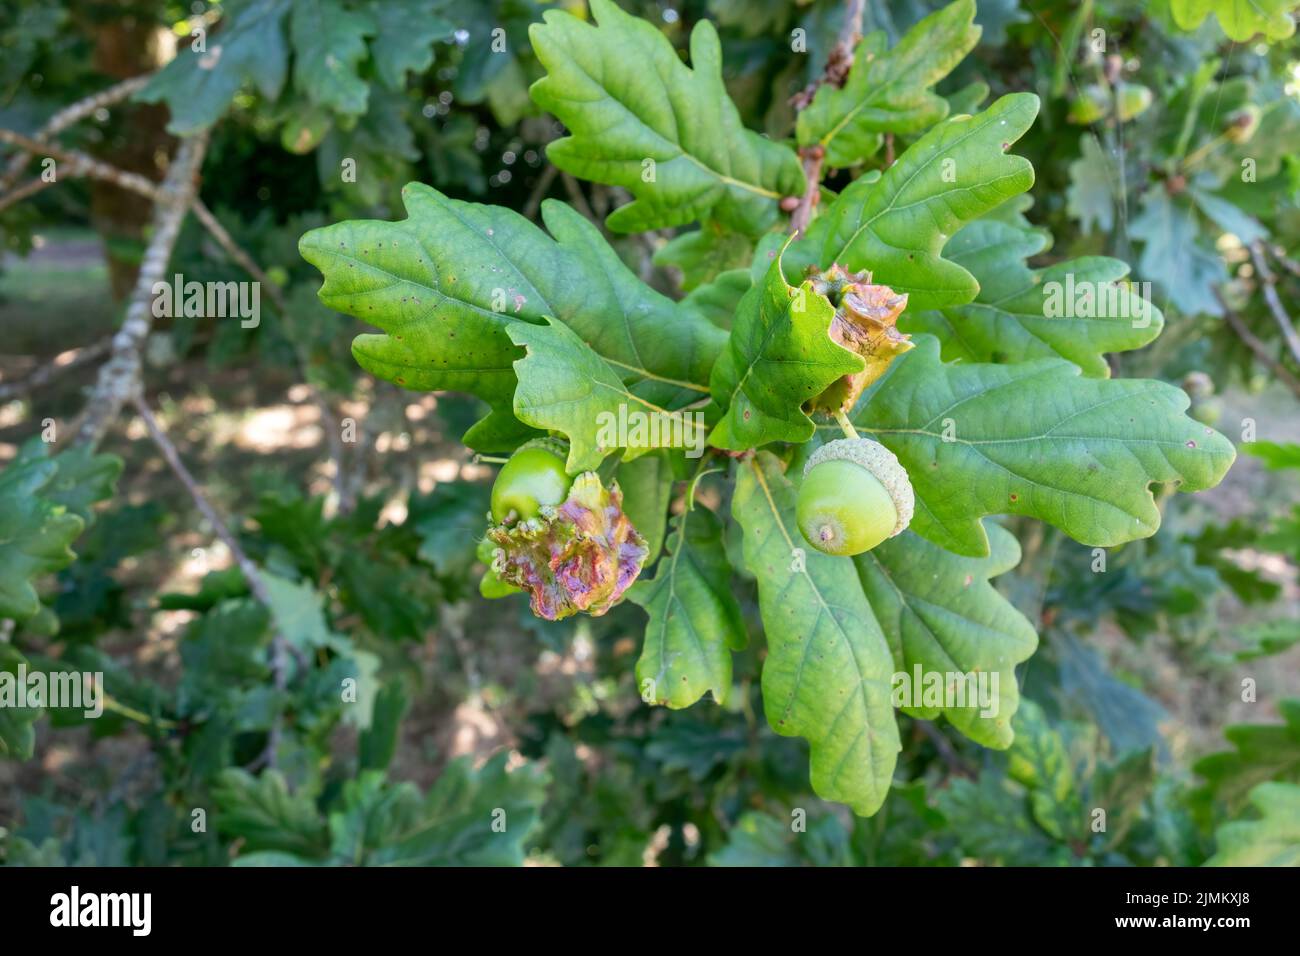 Knopper gall wasp damage to acorns on an english Oak tree Stock Photo